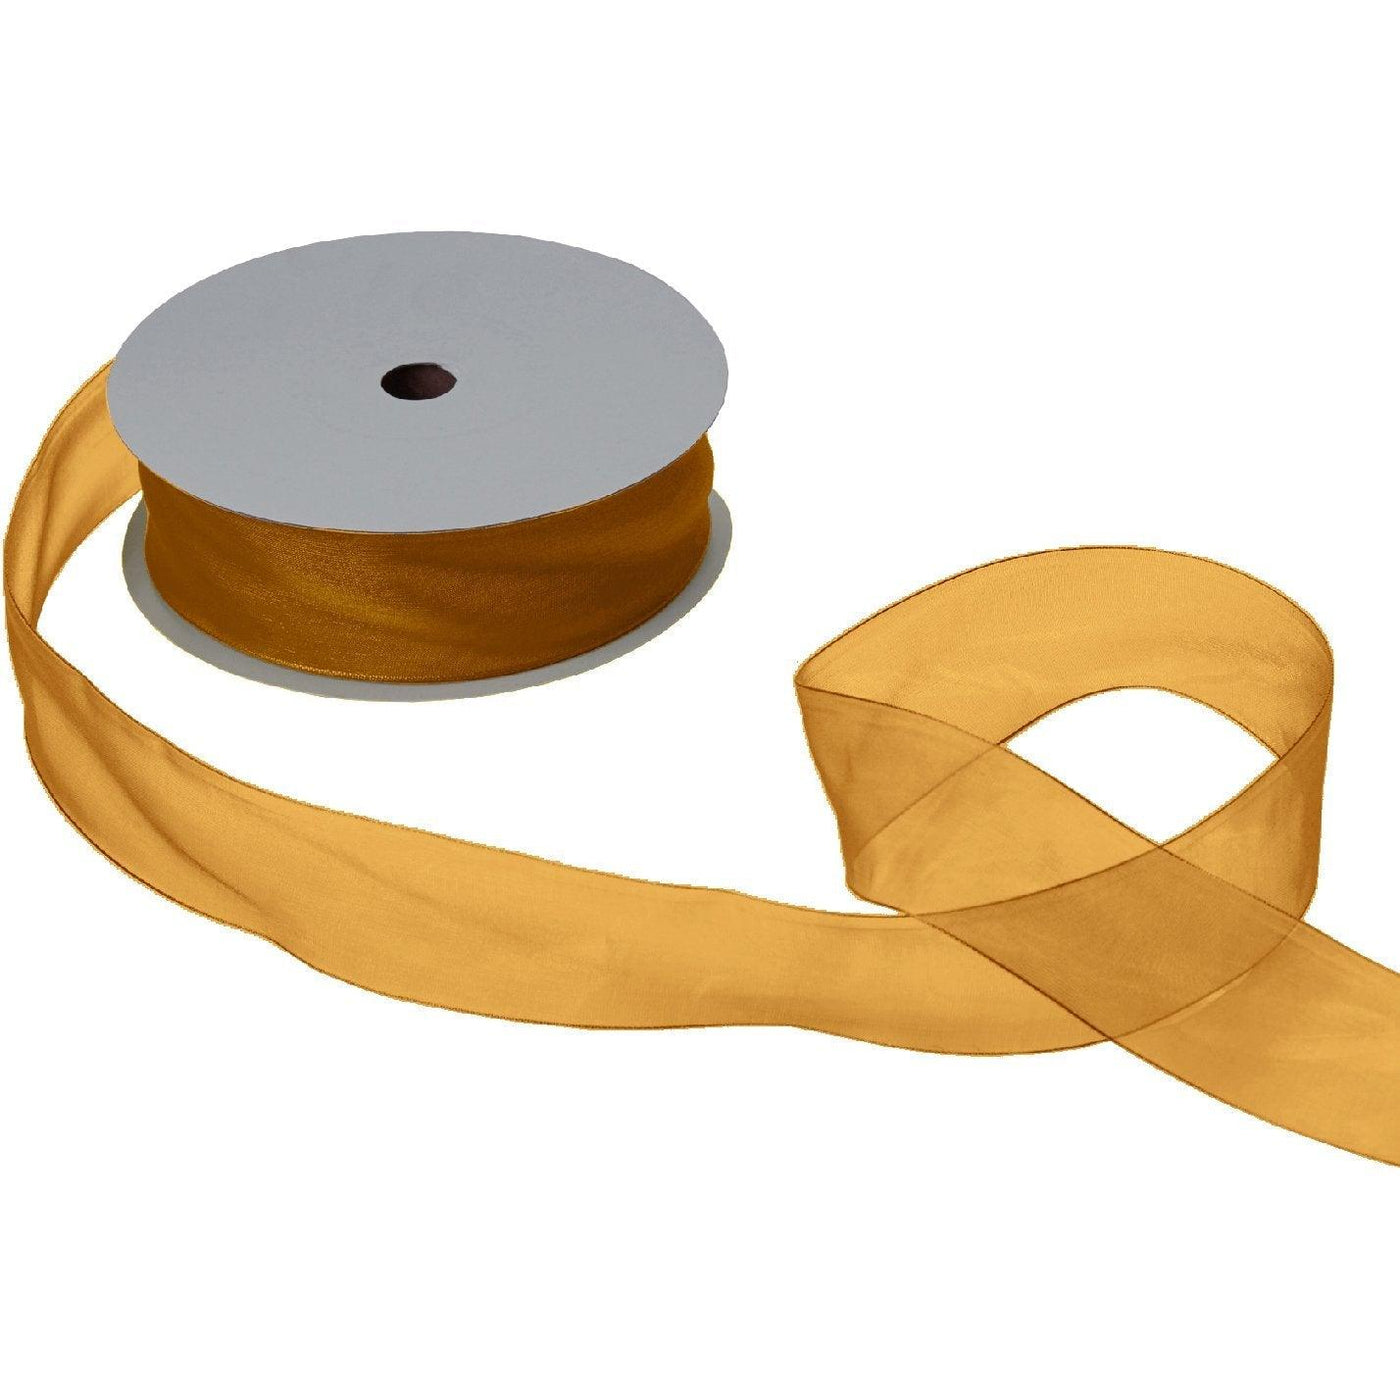 Jillson & Roberts Organdy Sheer Ribbon, 1 1/2" Wide x 100 Yards, Gold by Present Paper - Vysn